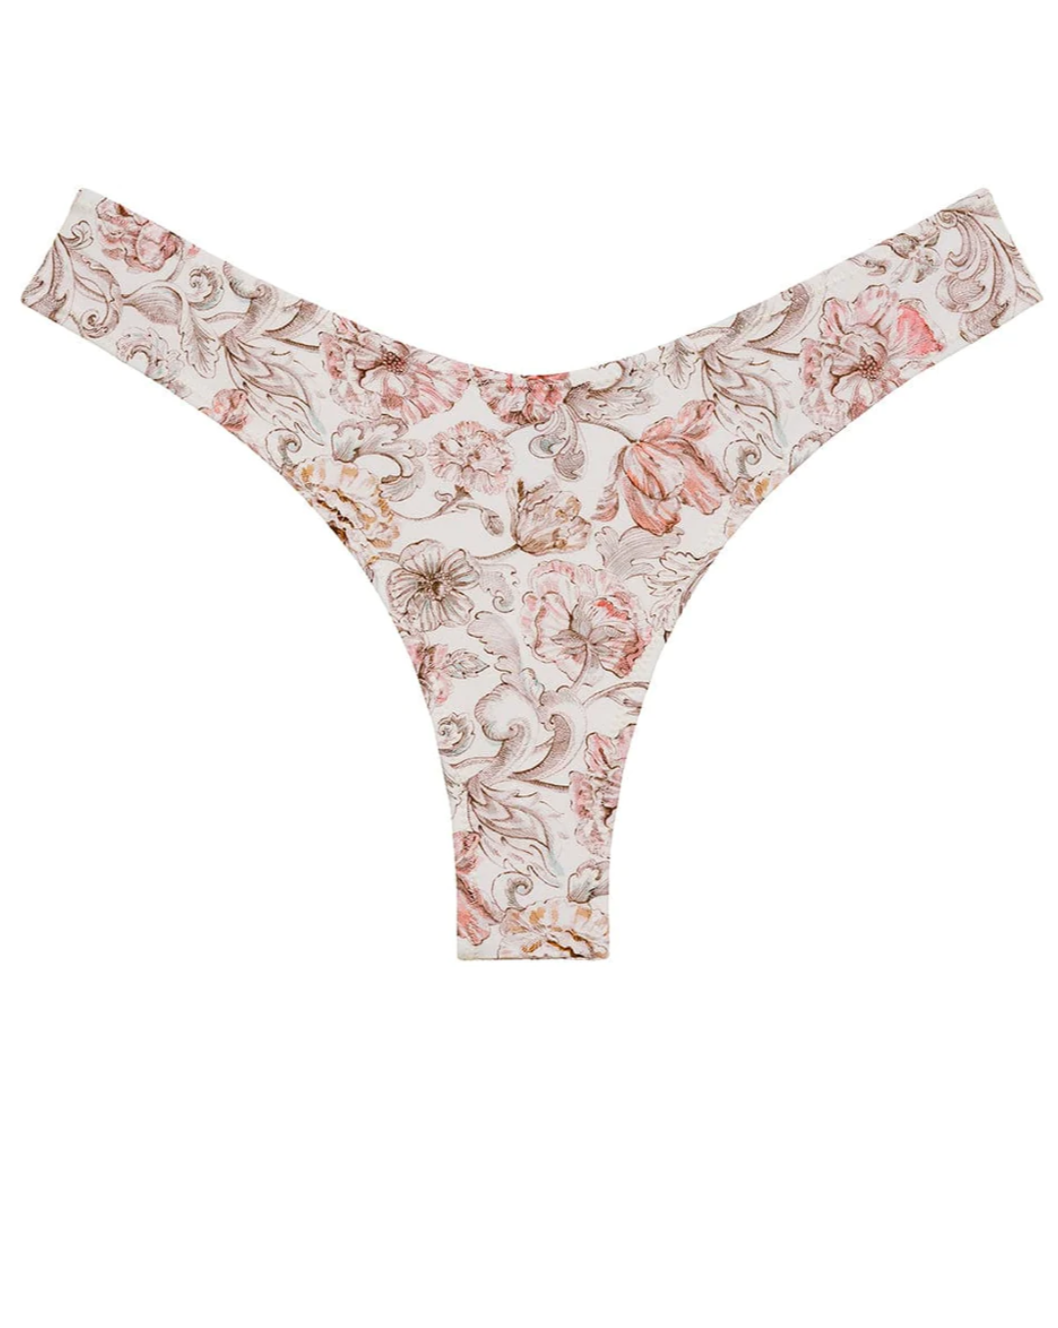 Venecia Floral Lulu Bikini Bottom